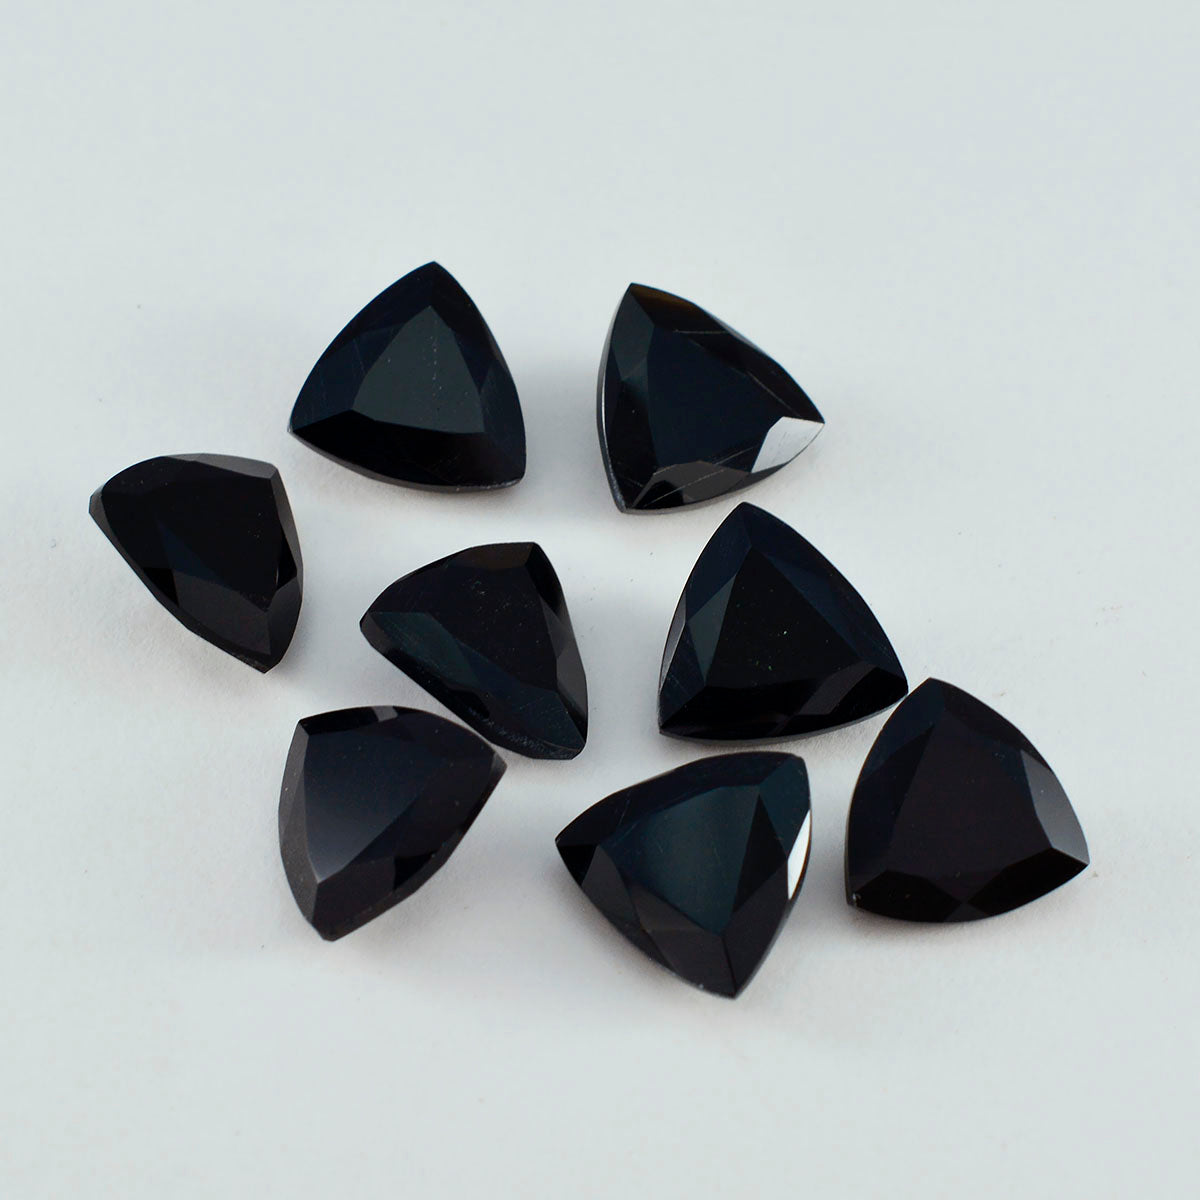 Riyogems 1PC Real Black Onyx Faceted 8x8 mm Trillion Shape Nice Quality Gemstone